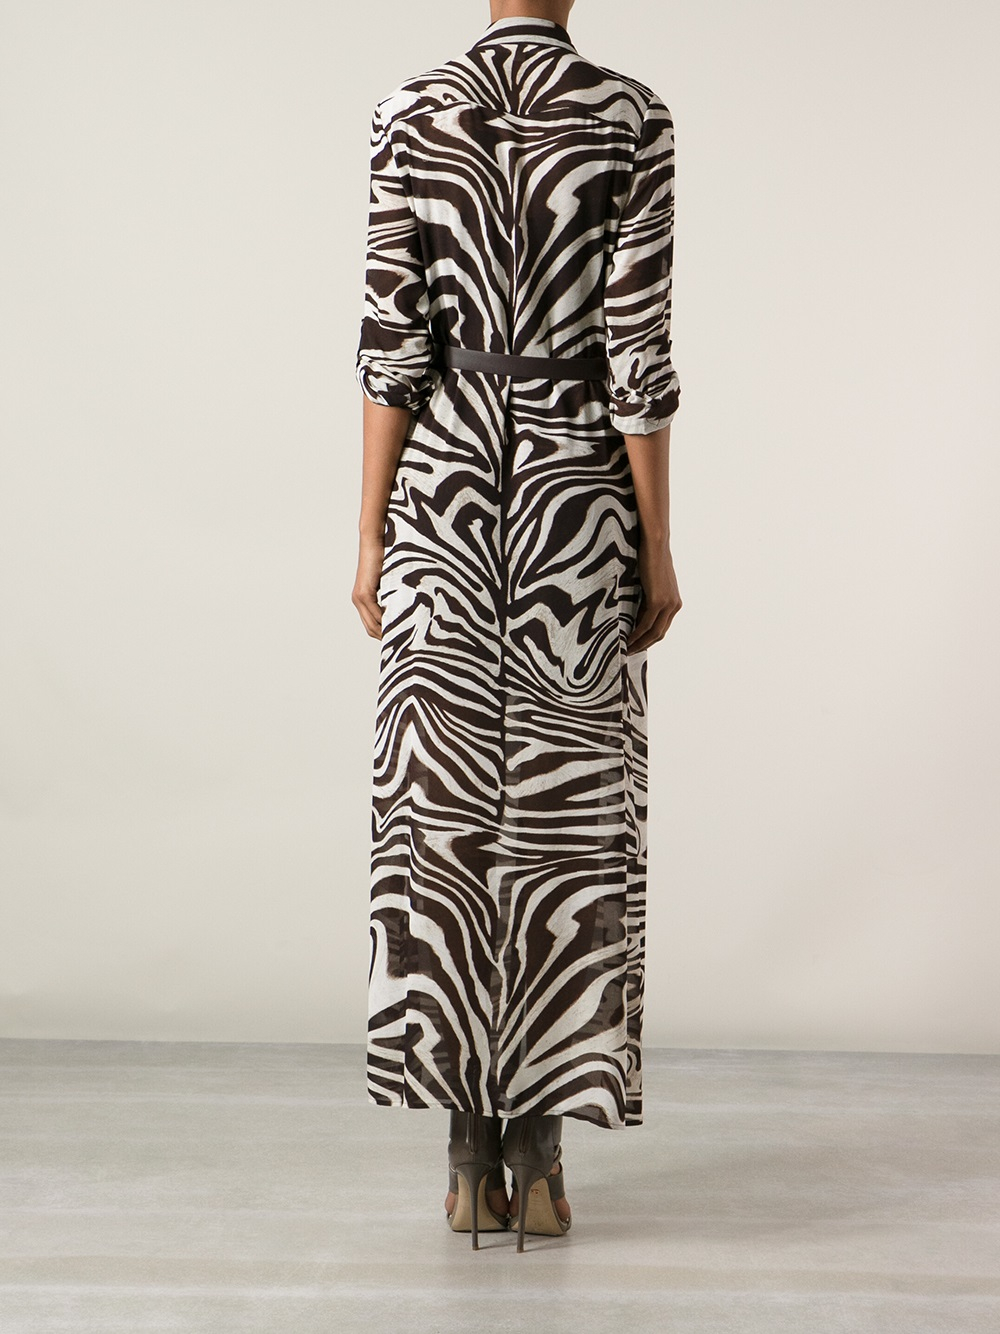 Lyst - Michael Michael Kors Zebra Print Shirt Dress in Brown